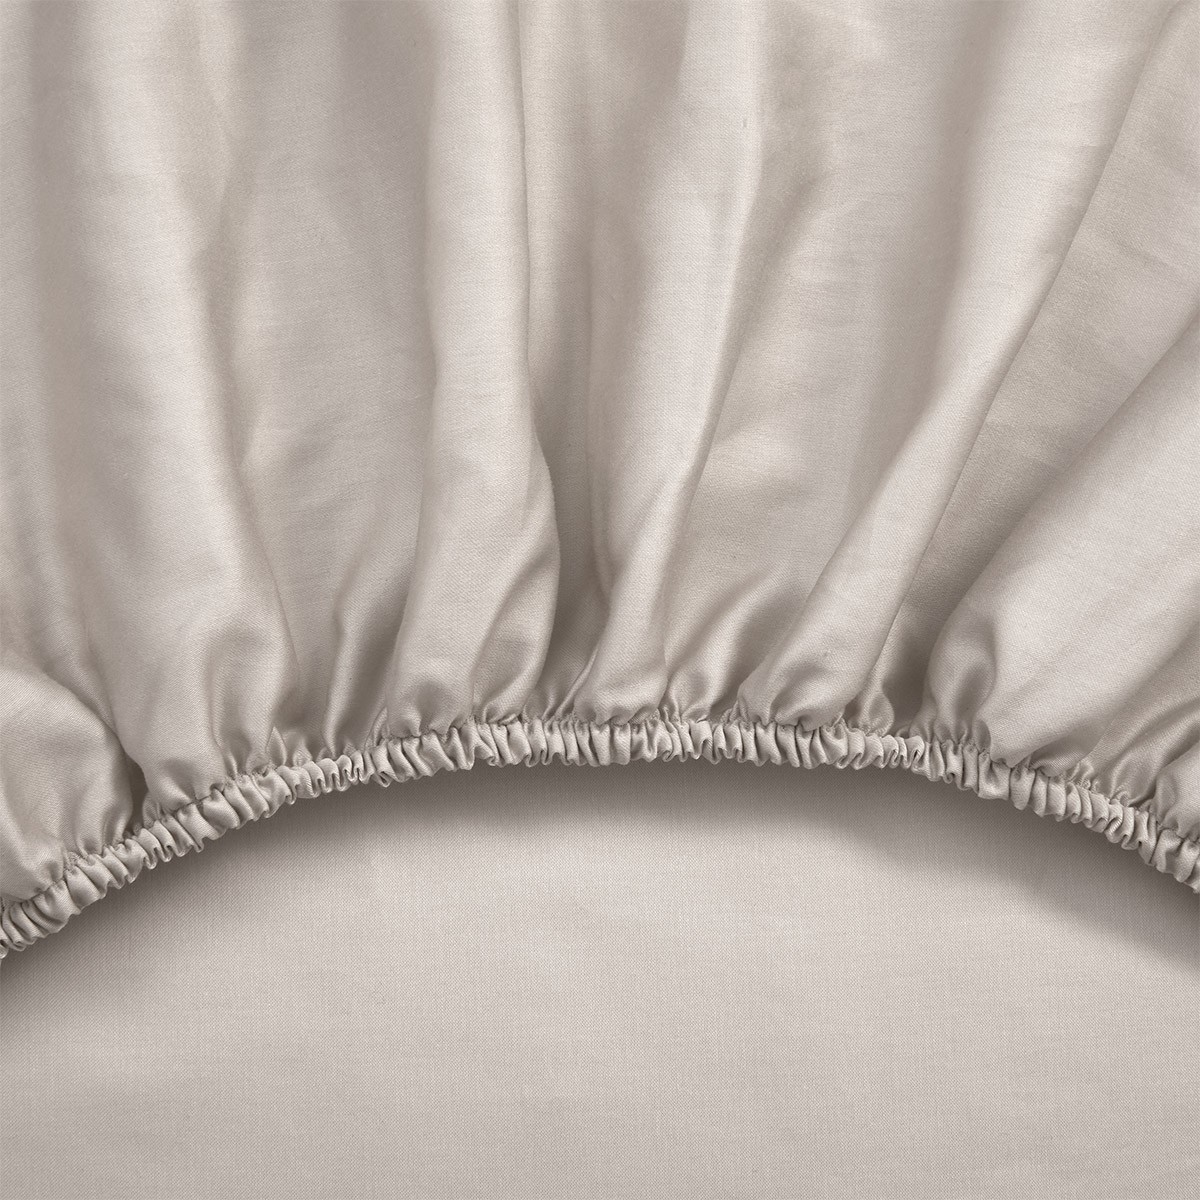 Bed Linen Tioman Multicoloured